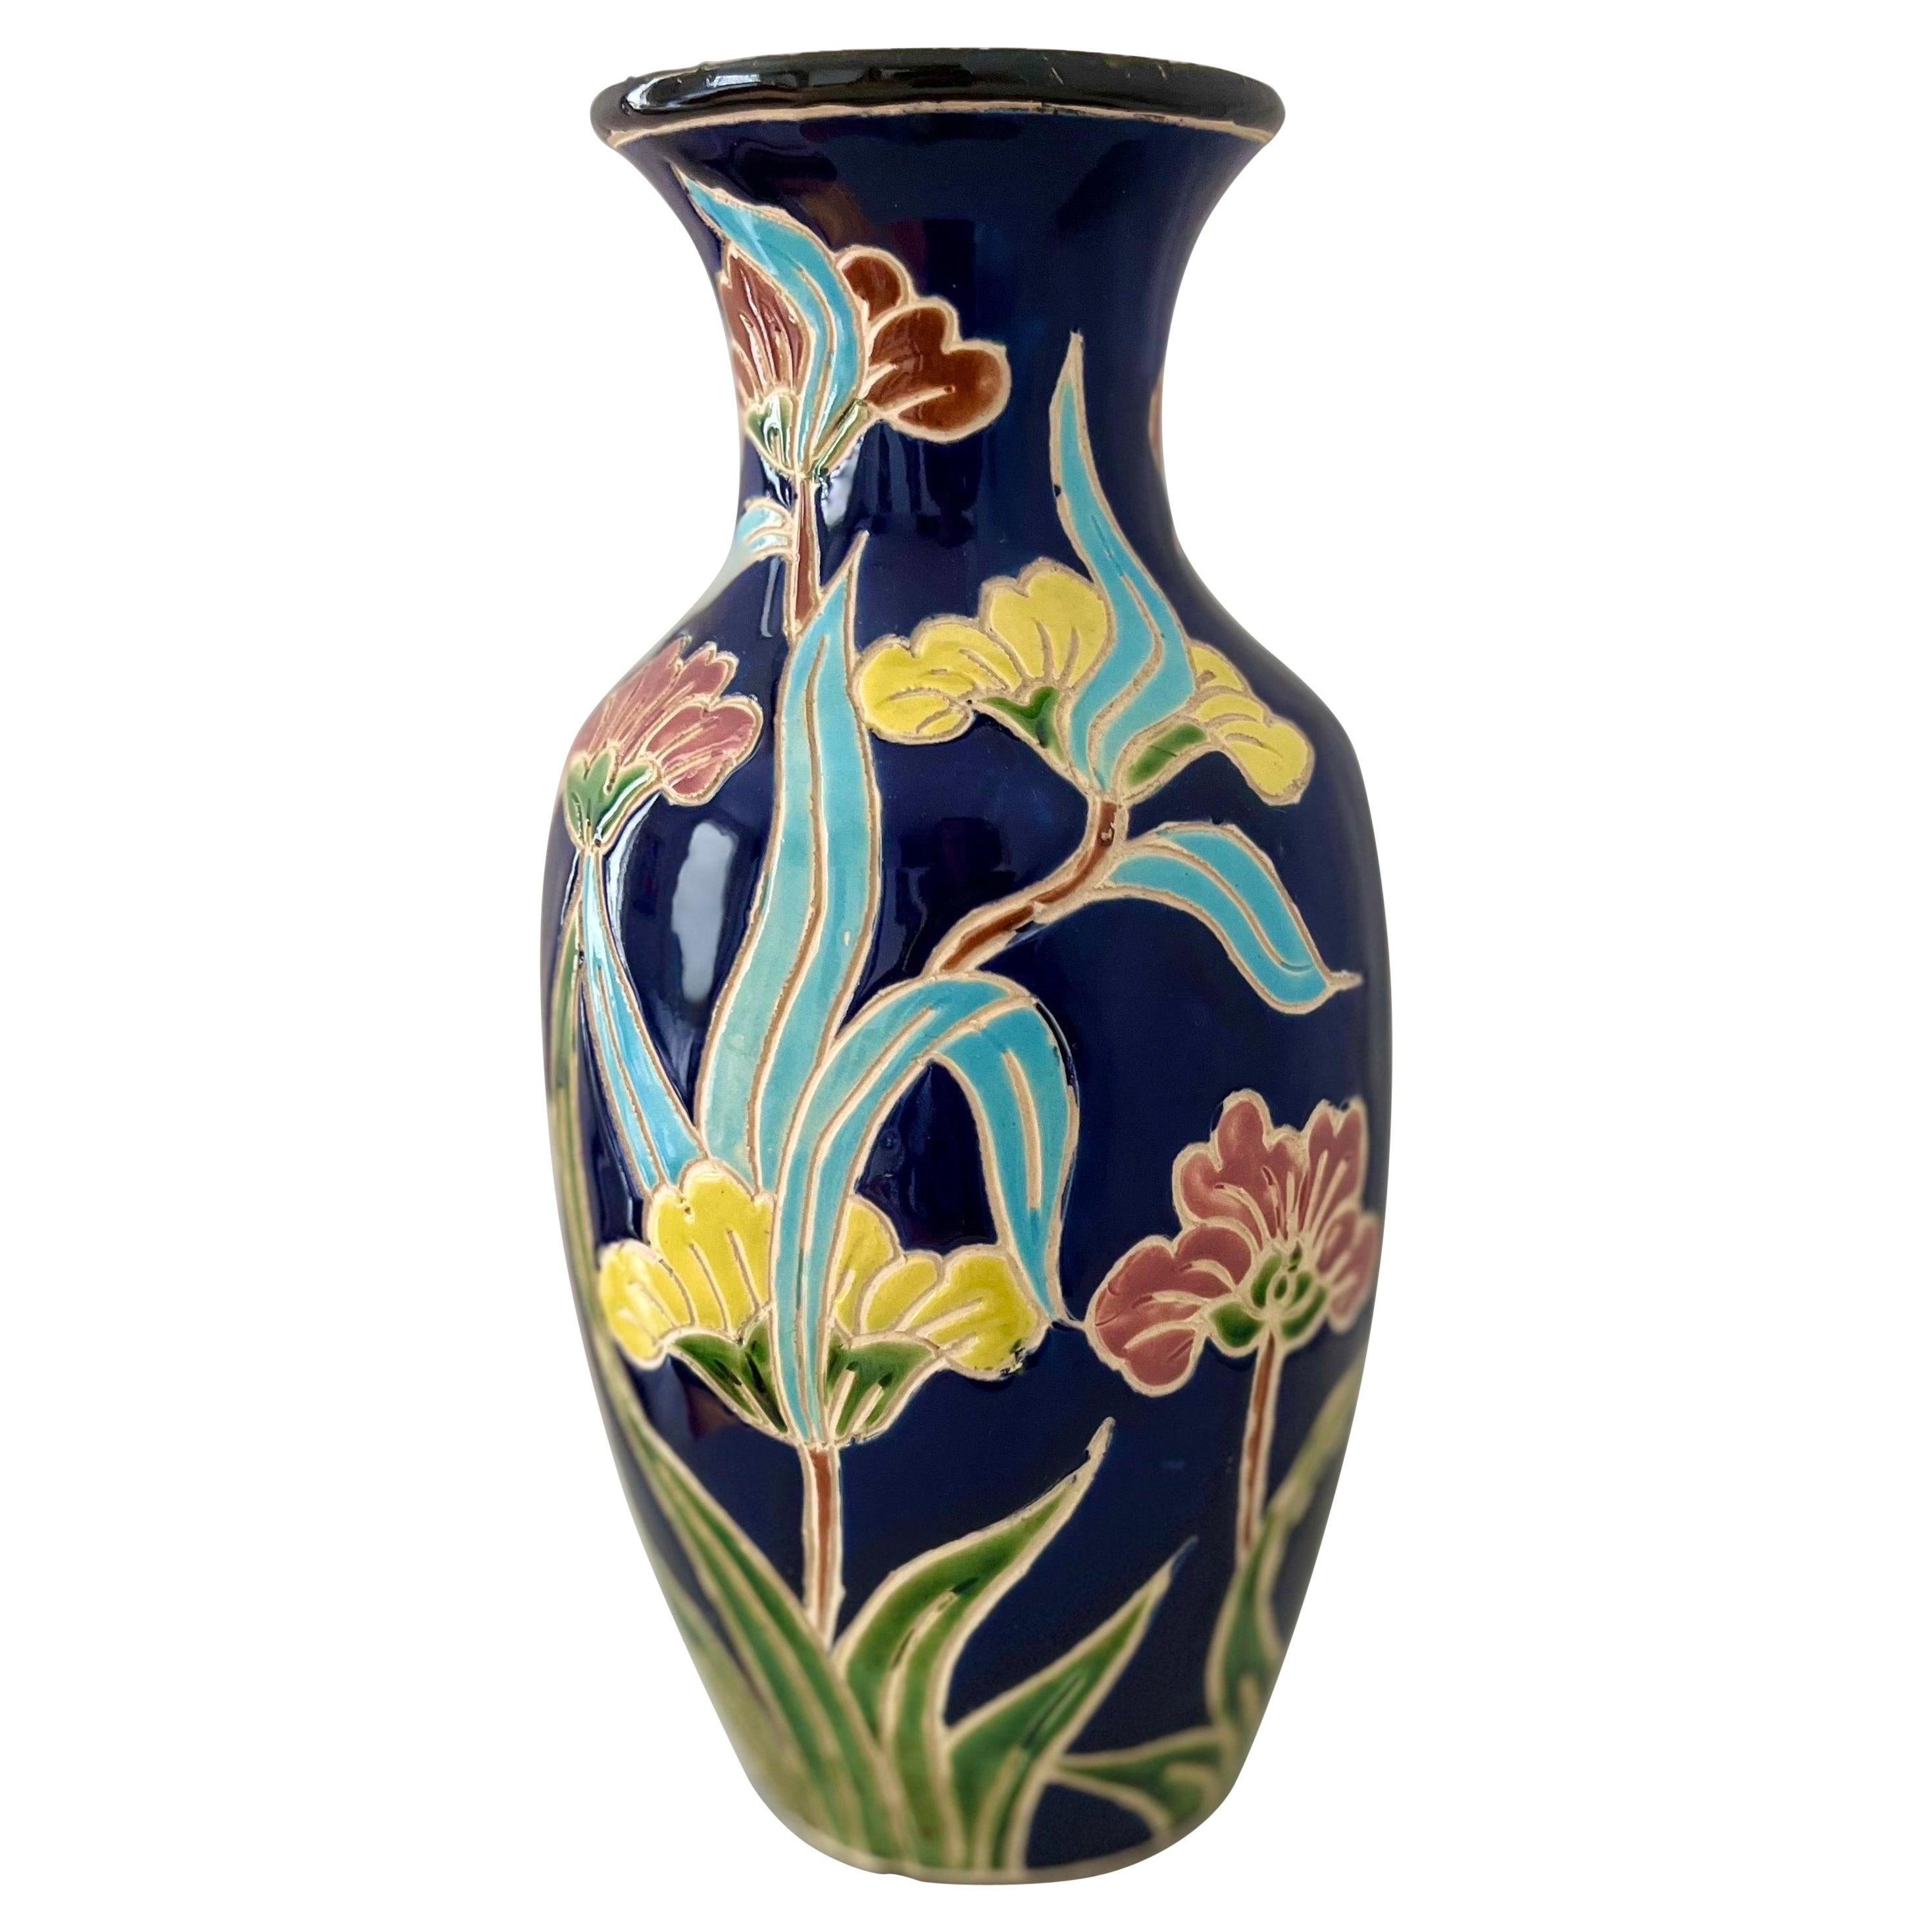 1960s/1970s Scandinavian Organic Modern Ceramic Vase with Colorful Floral Motifs